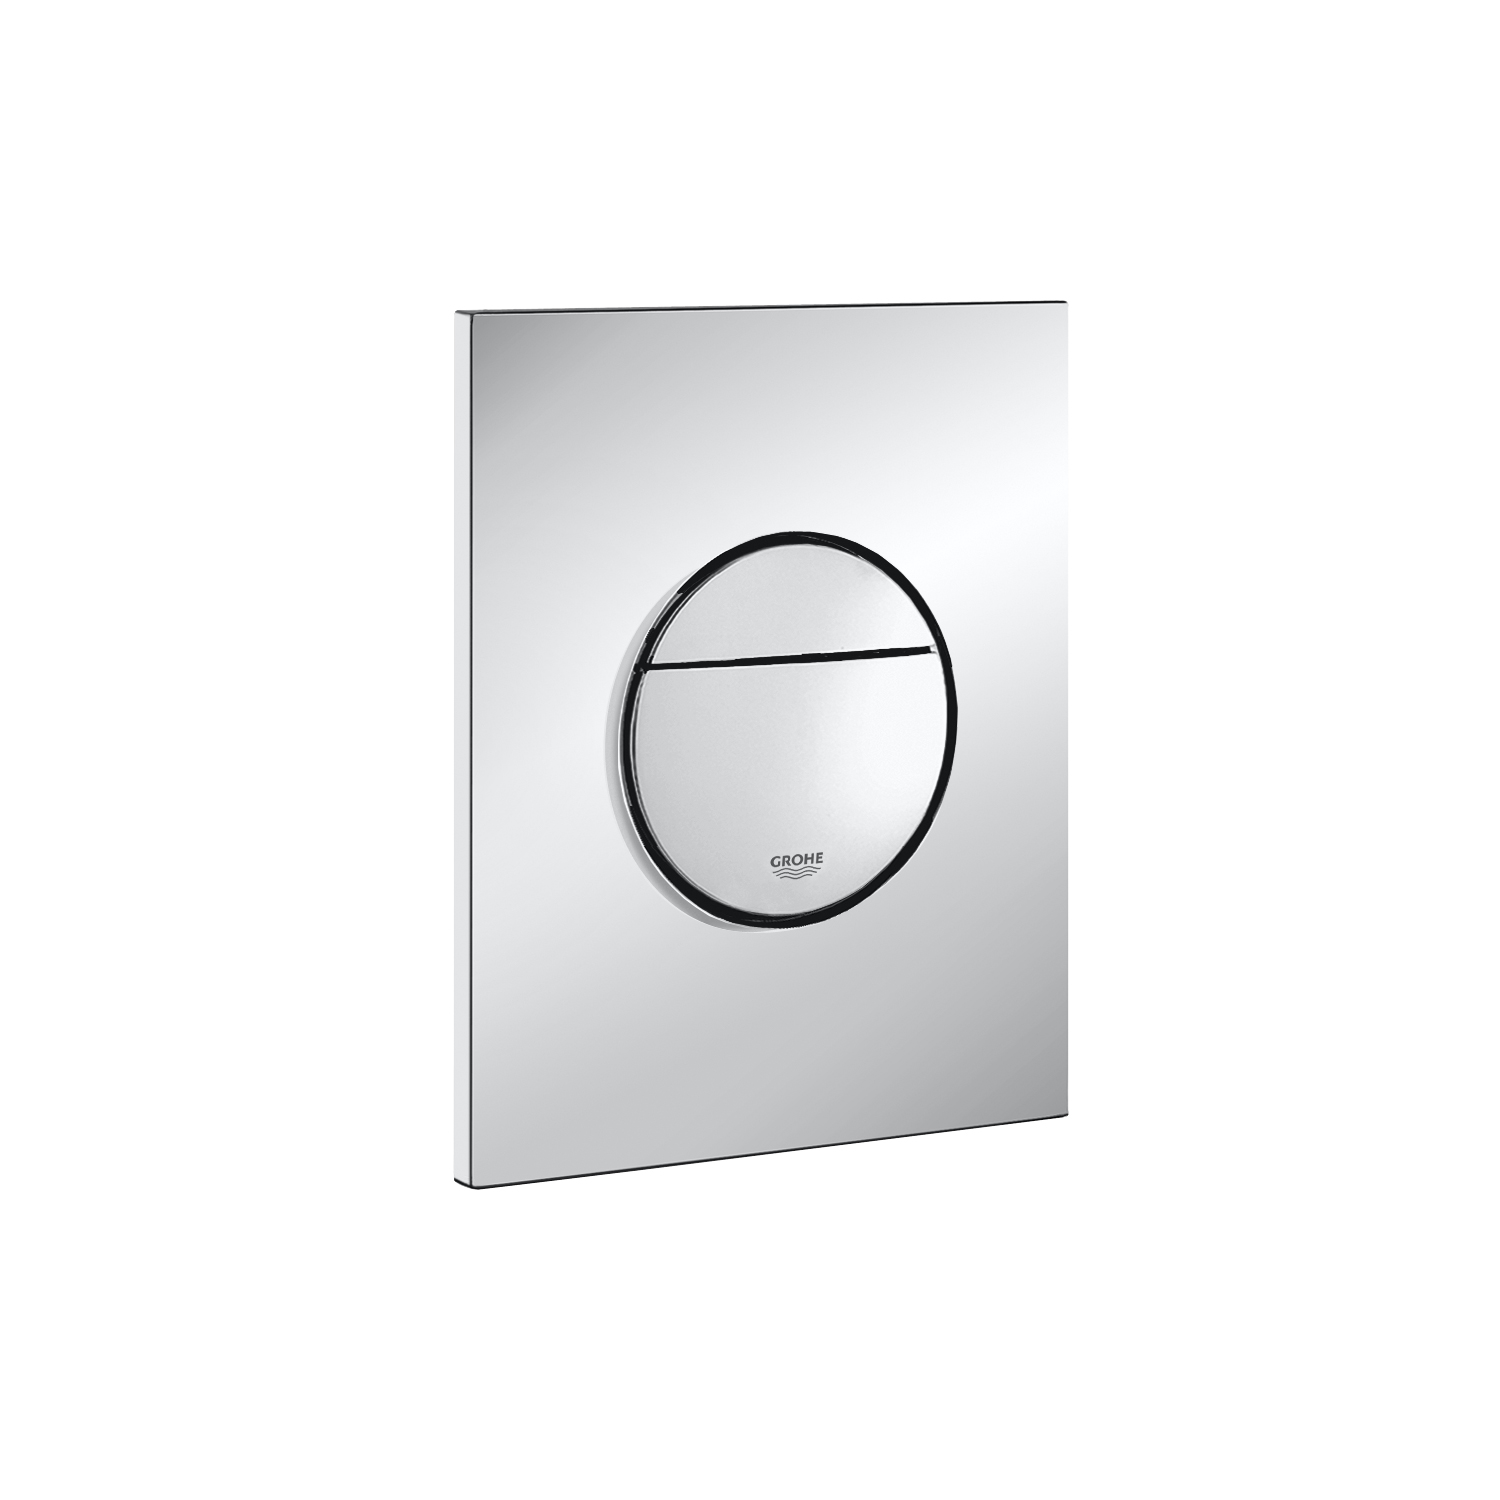 GROHE NOVA Cosmopolitan WC Dual Flush Button Bright Chrome Wall Plate 38765 000 